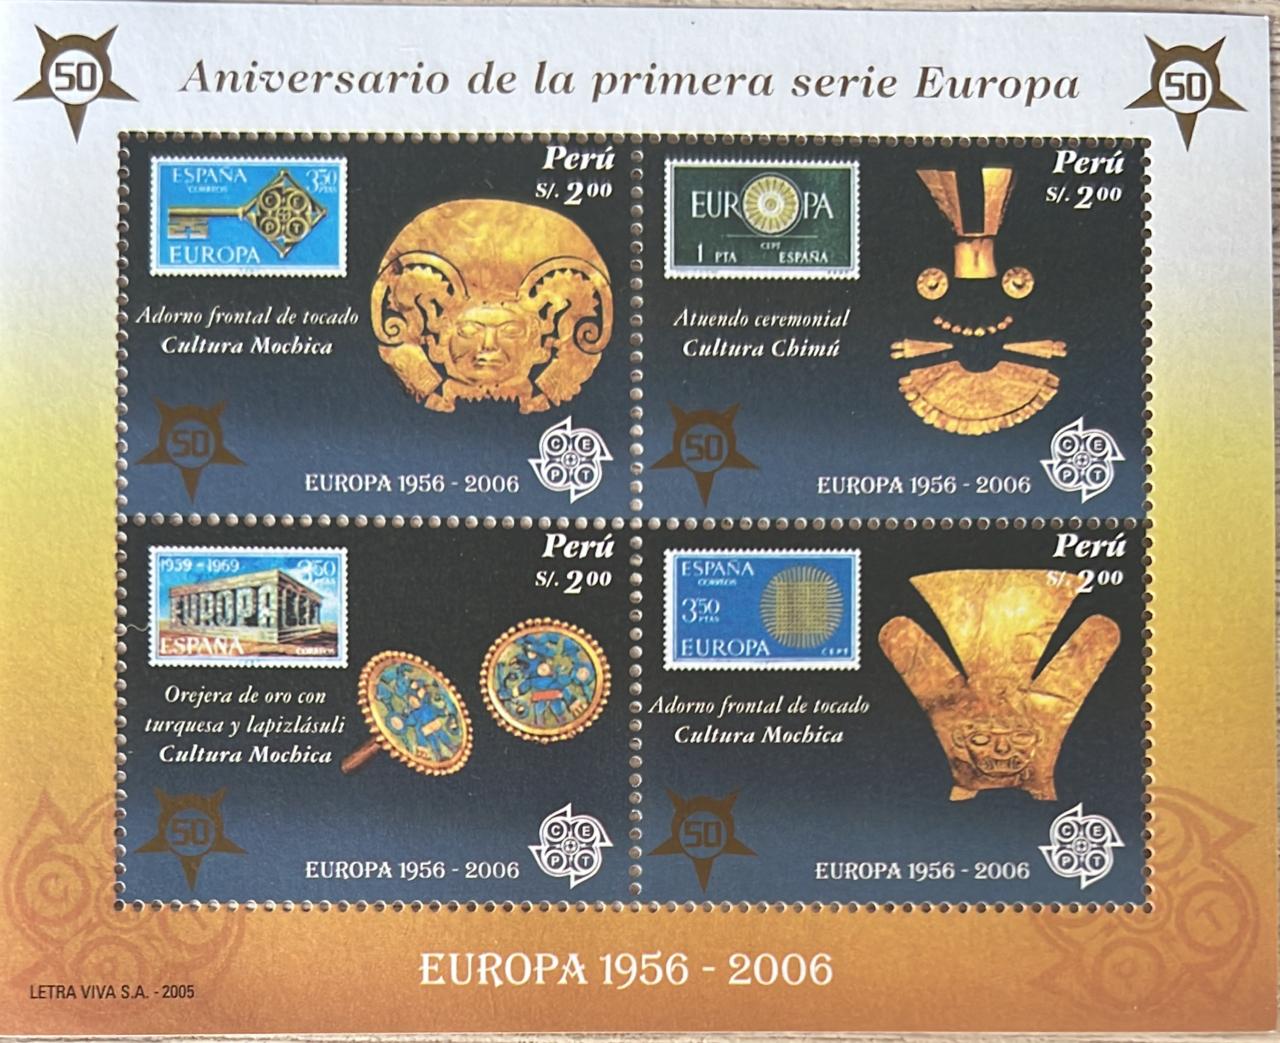 Peru 2005 Aniv of EUROPA Series Stamp on Stamp M/s MNH